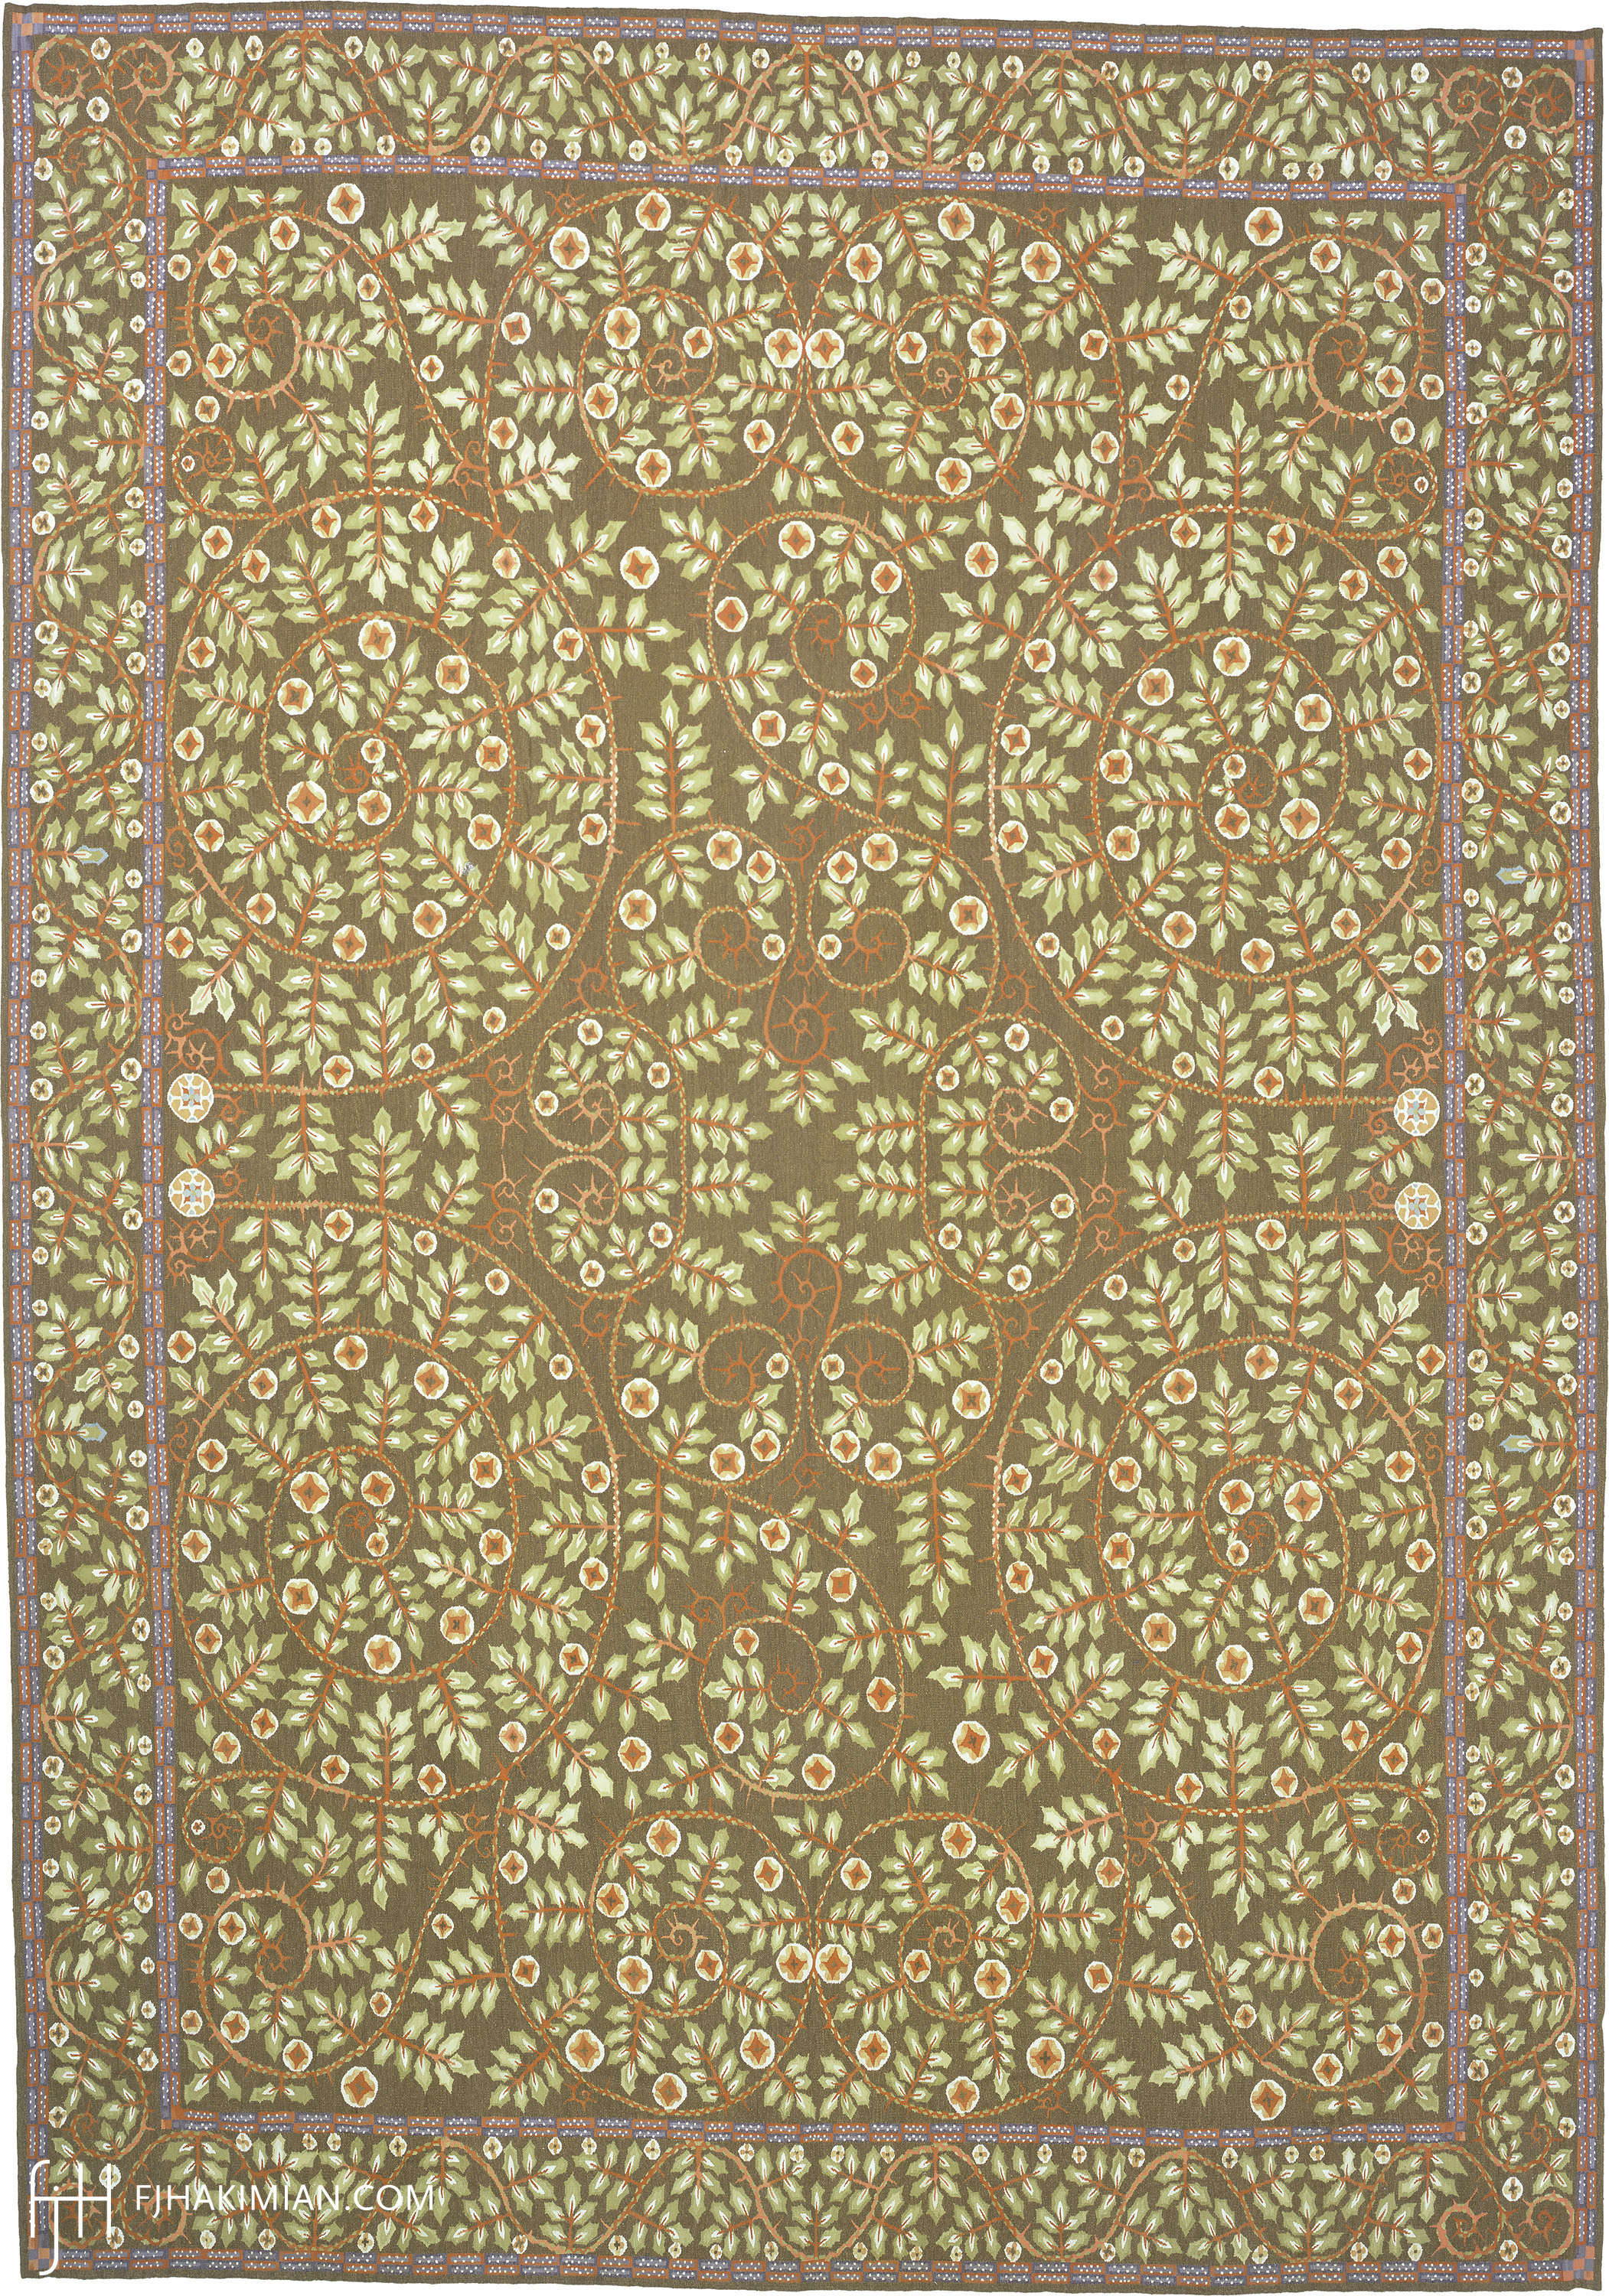 16756 Wiener Werkstatte Design | Custom Modern & 20th Century Design Carpet | FJ Hakimian | Carpet Gallery in NYC